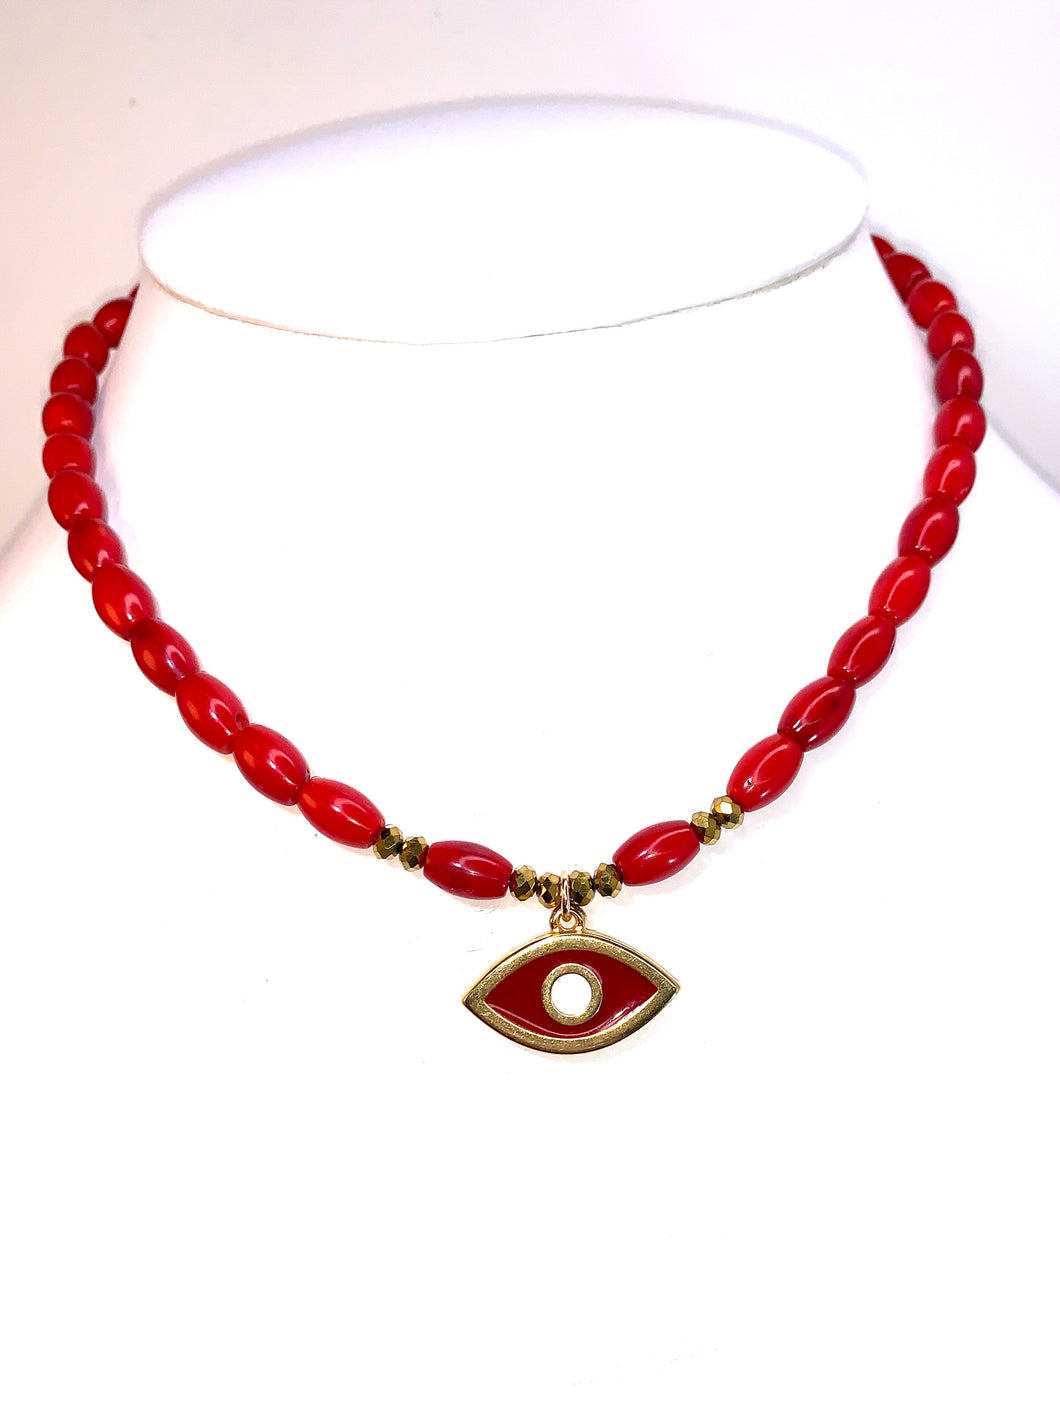 Coral evil eye necklace